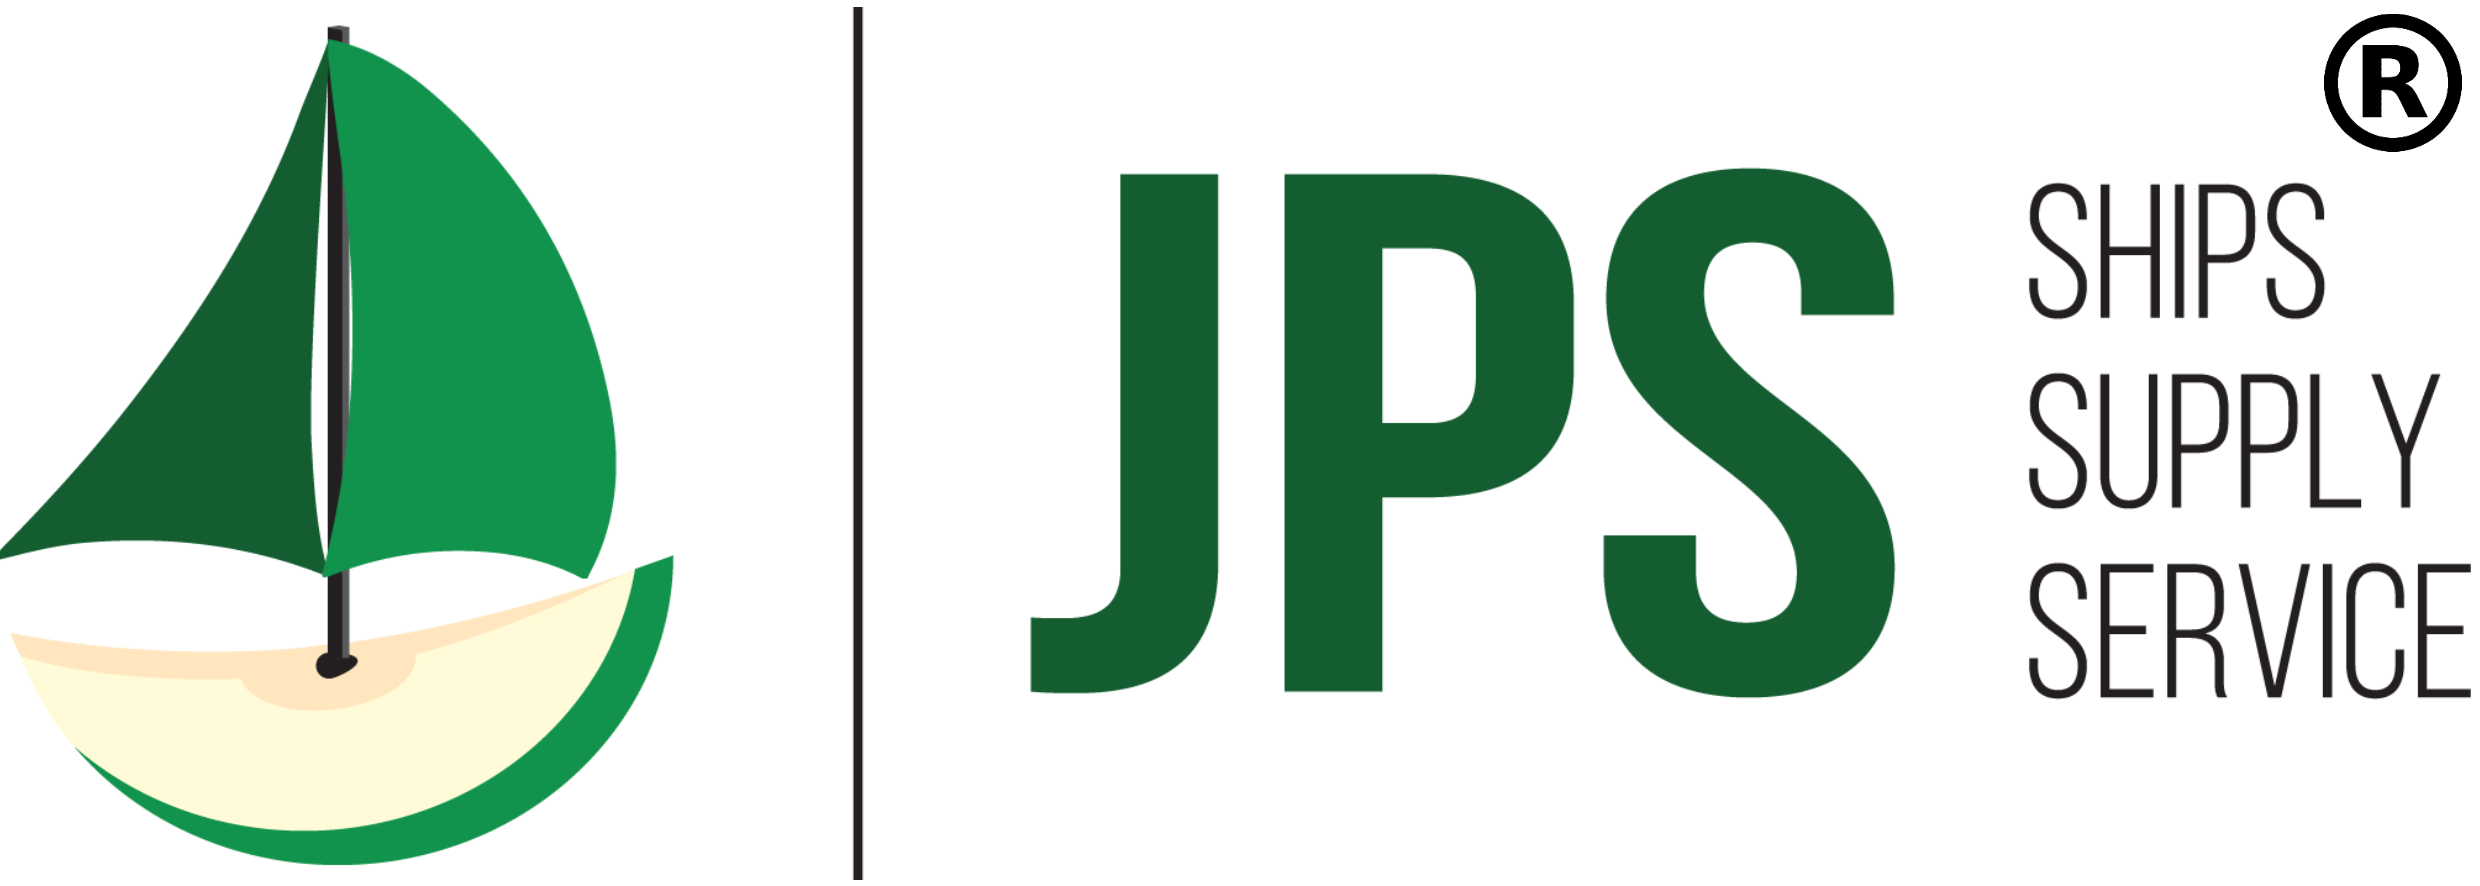 Supply services. JPS. JPS logo. JPS JRS. JPS значок GPG.